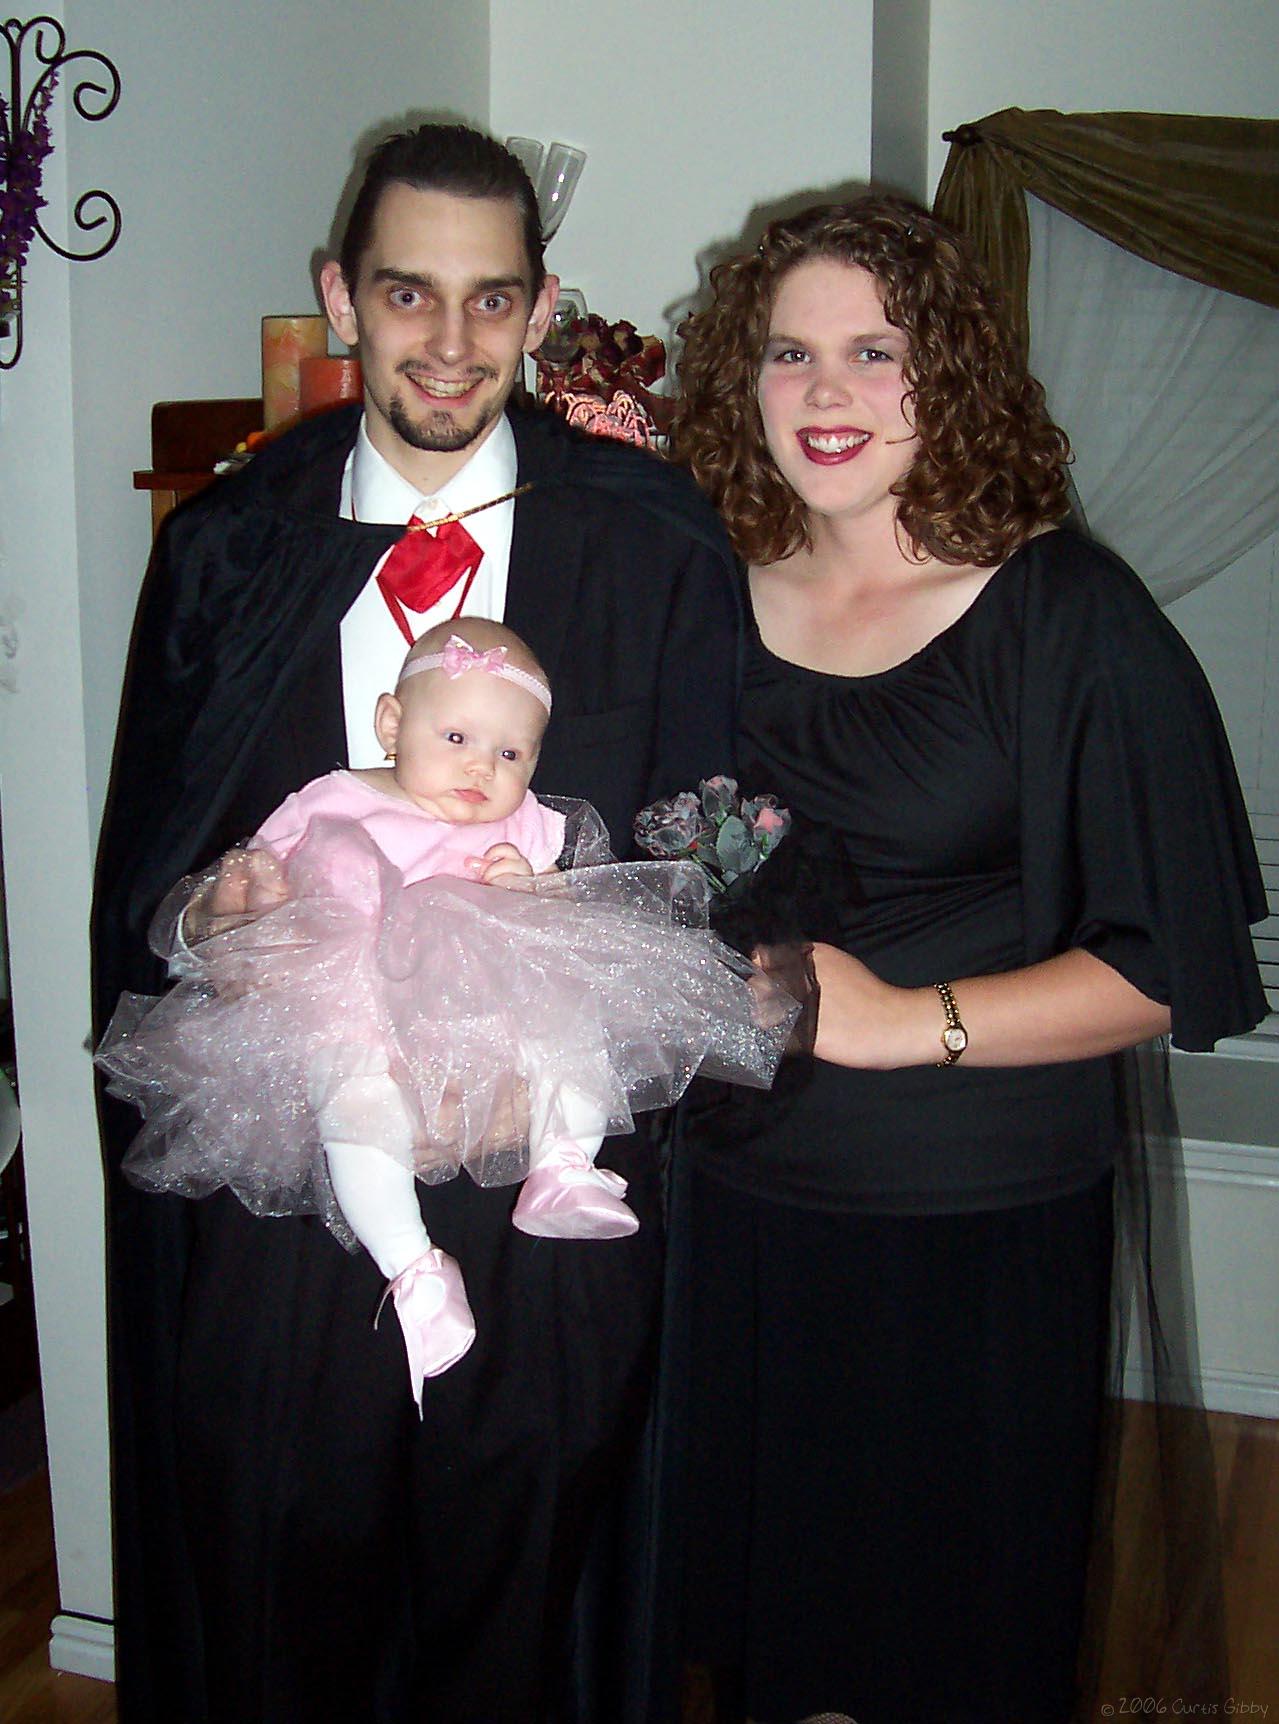 Halloween 2005 - Curtis as Dracula, Sarah as Dracula's Bride, Audrey as a Ballerina